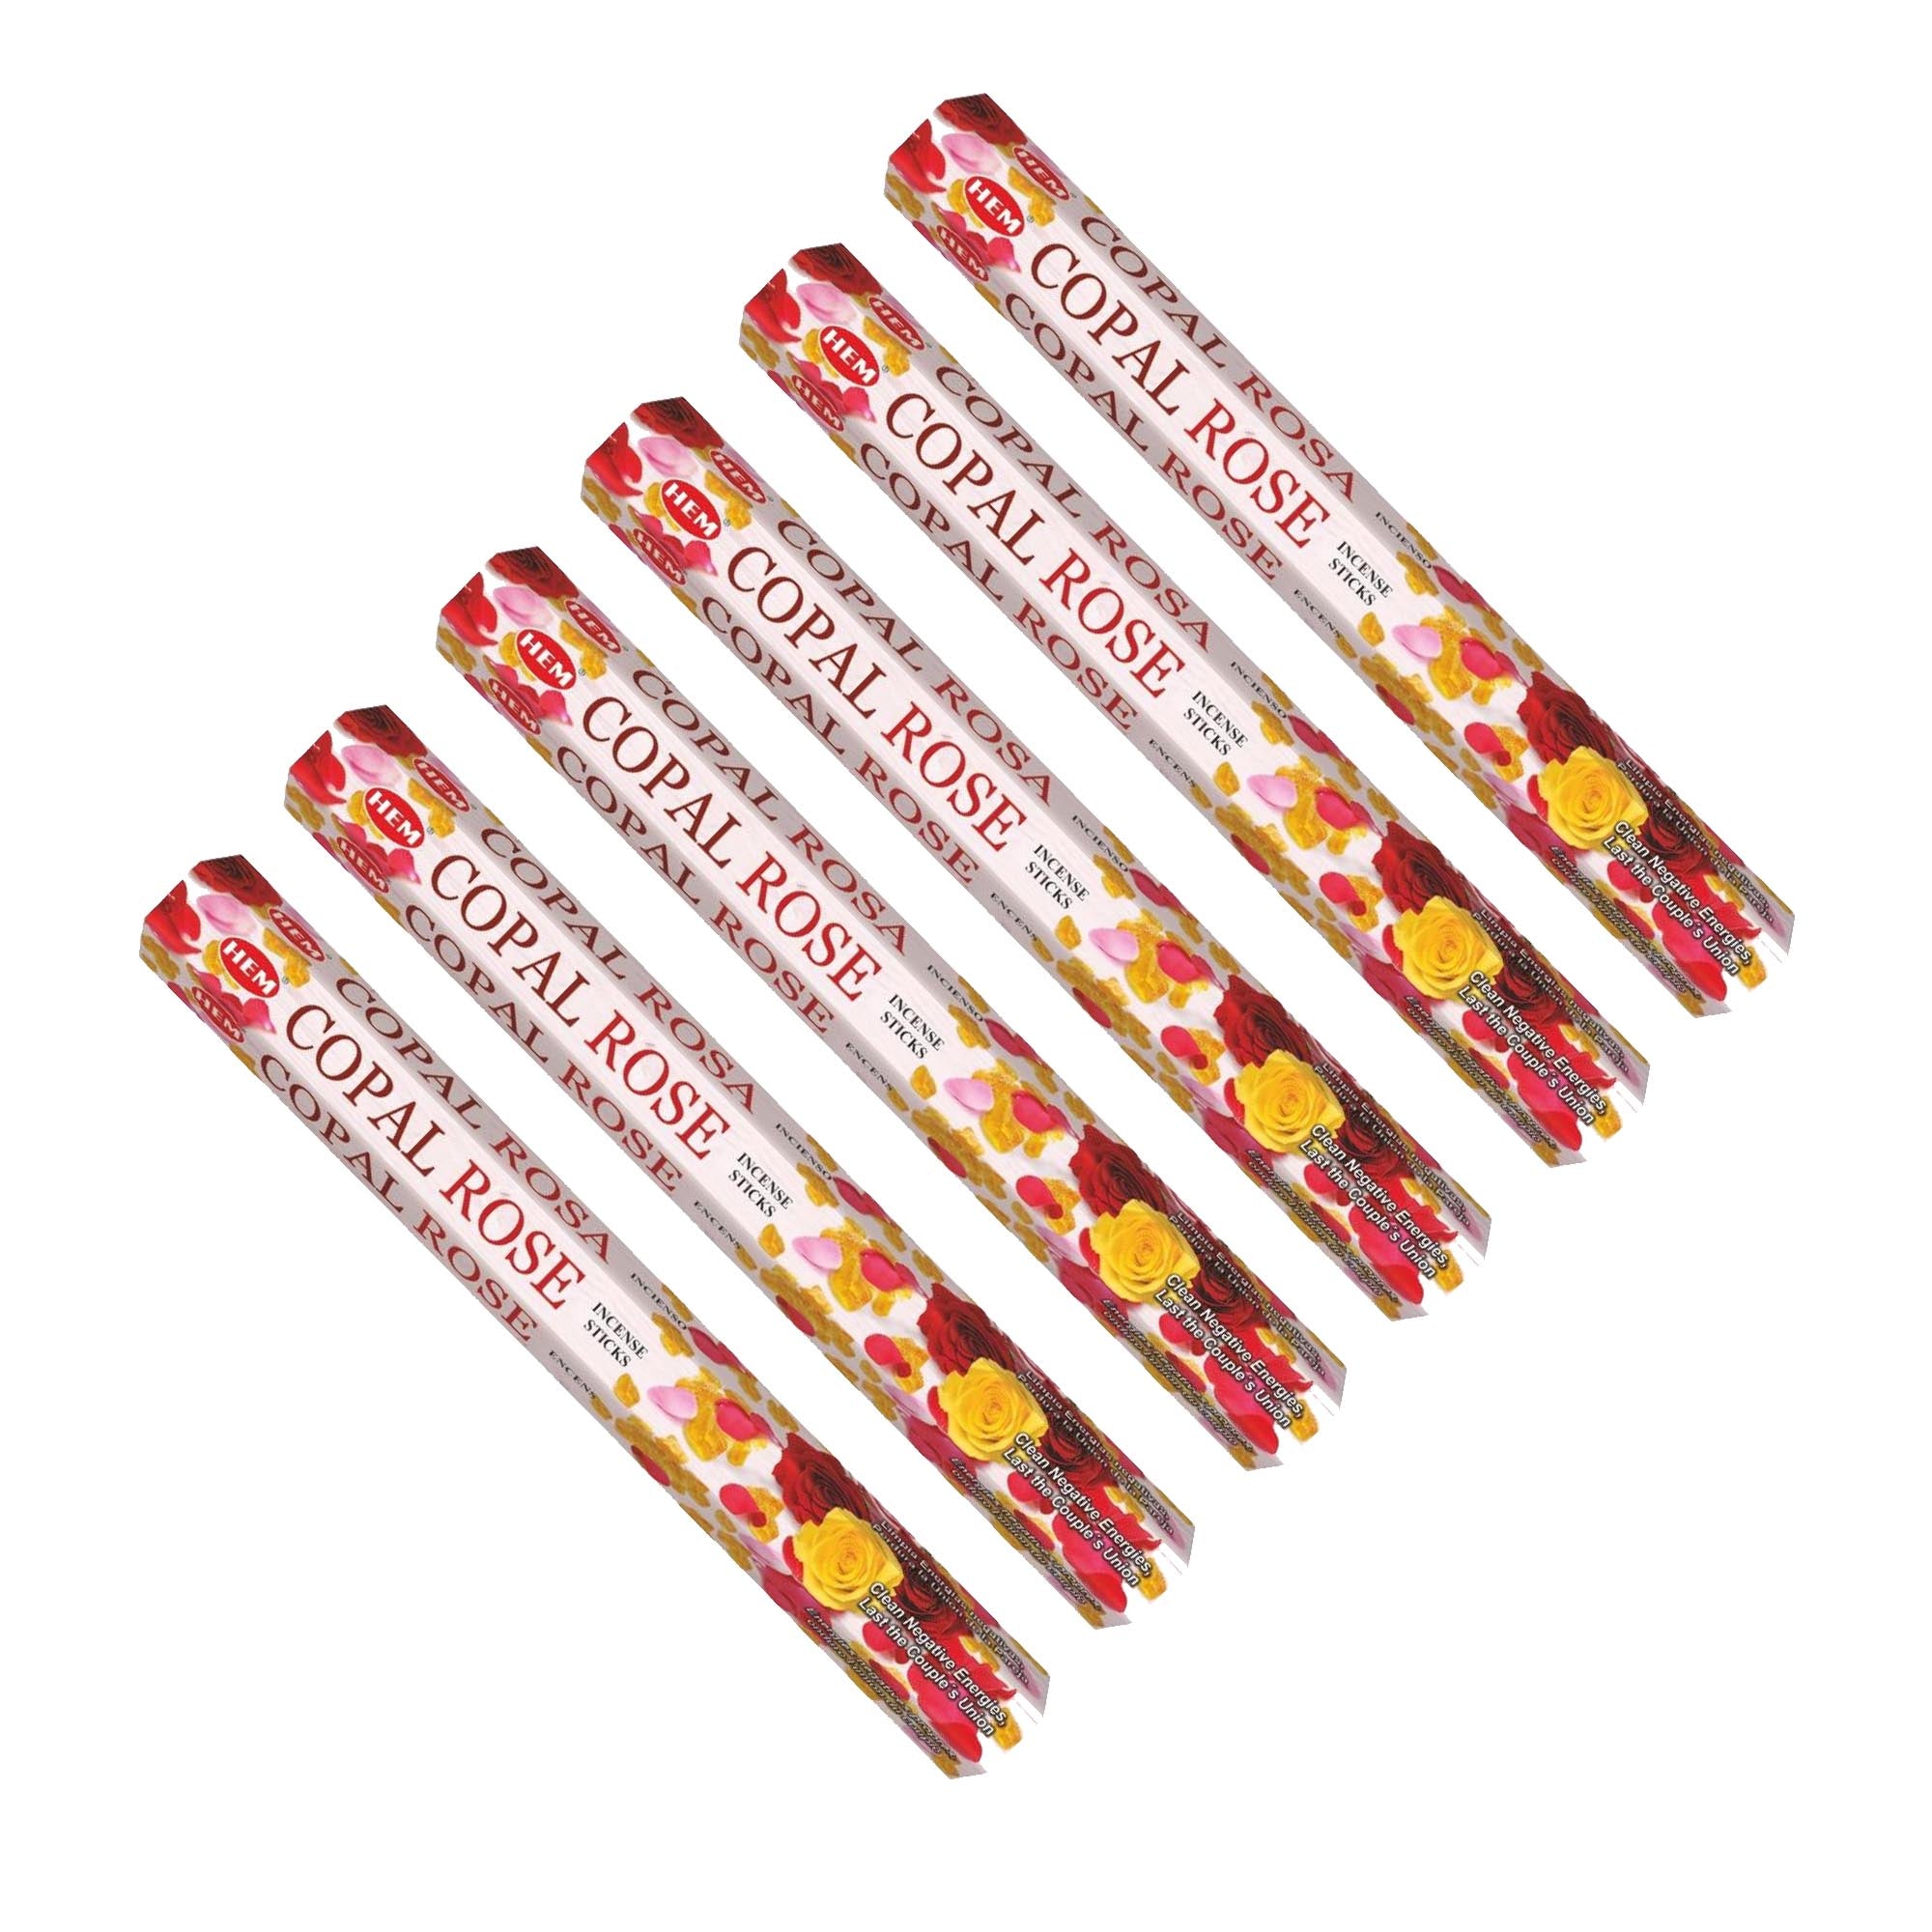 Hem - Hexagon - Copal Rose Incense Sticks